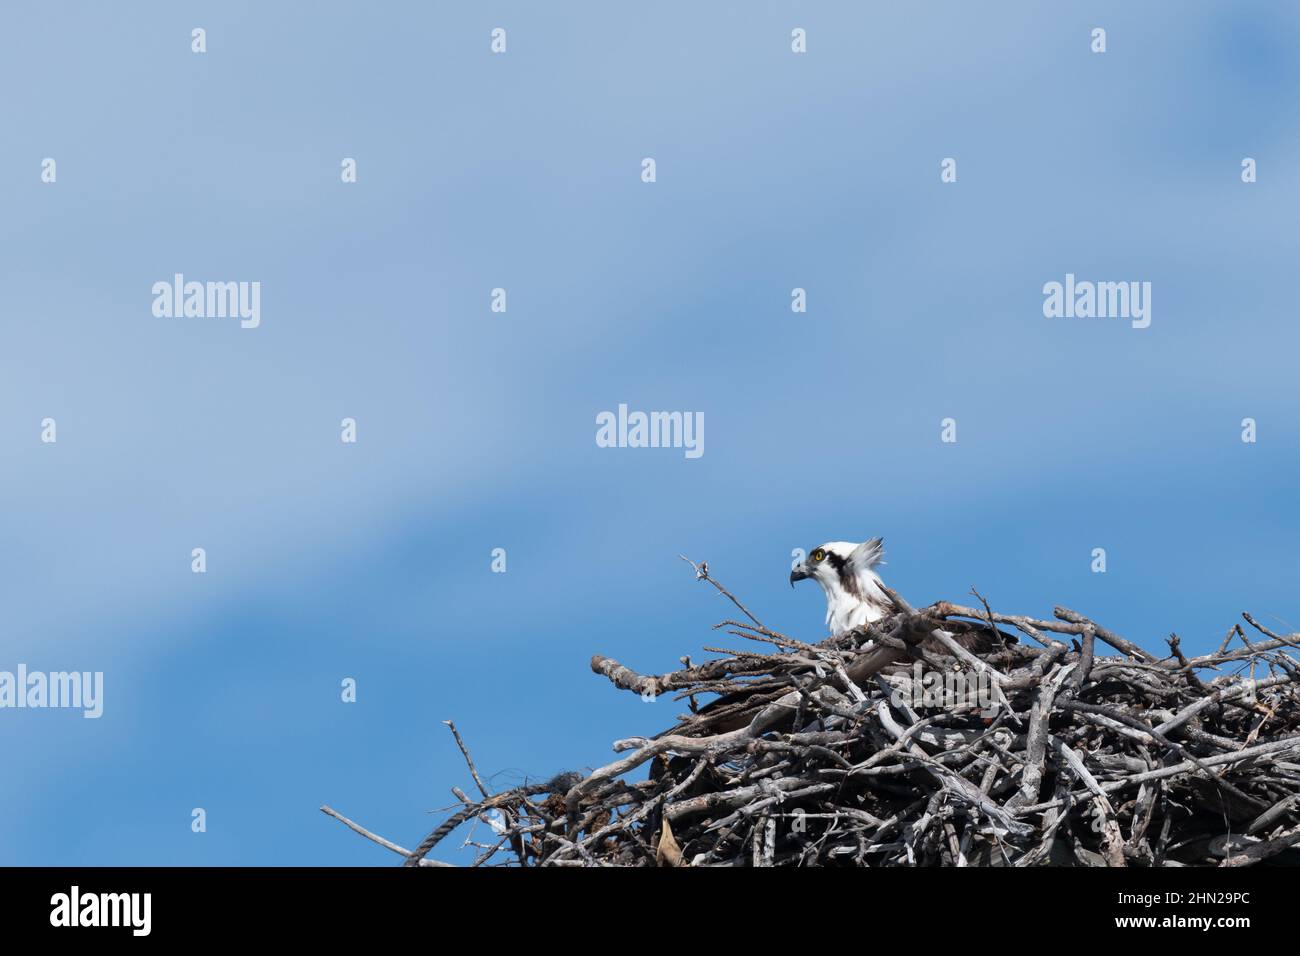 An Osprey (Pandion haliaetus) on its nest in the Florida Keys, USA. Stock Photo